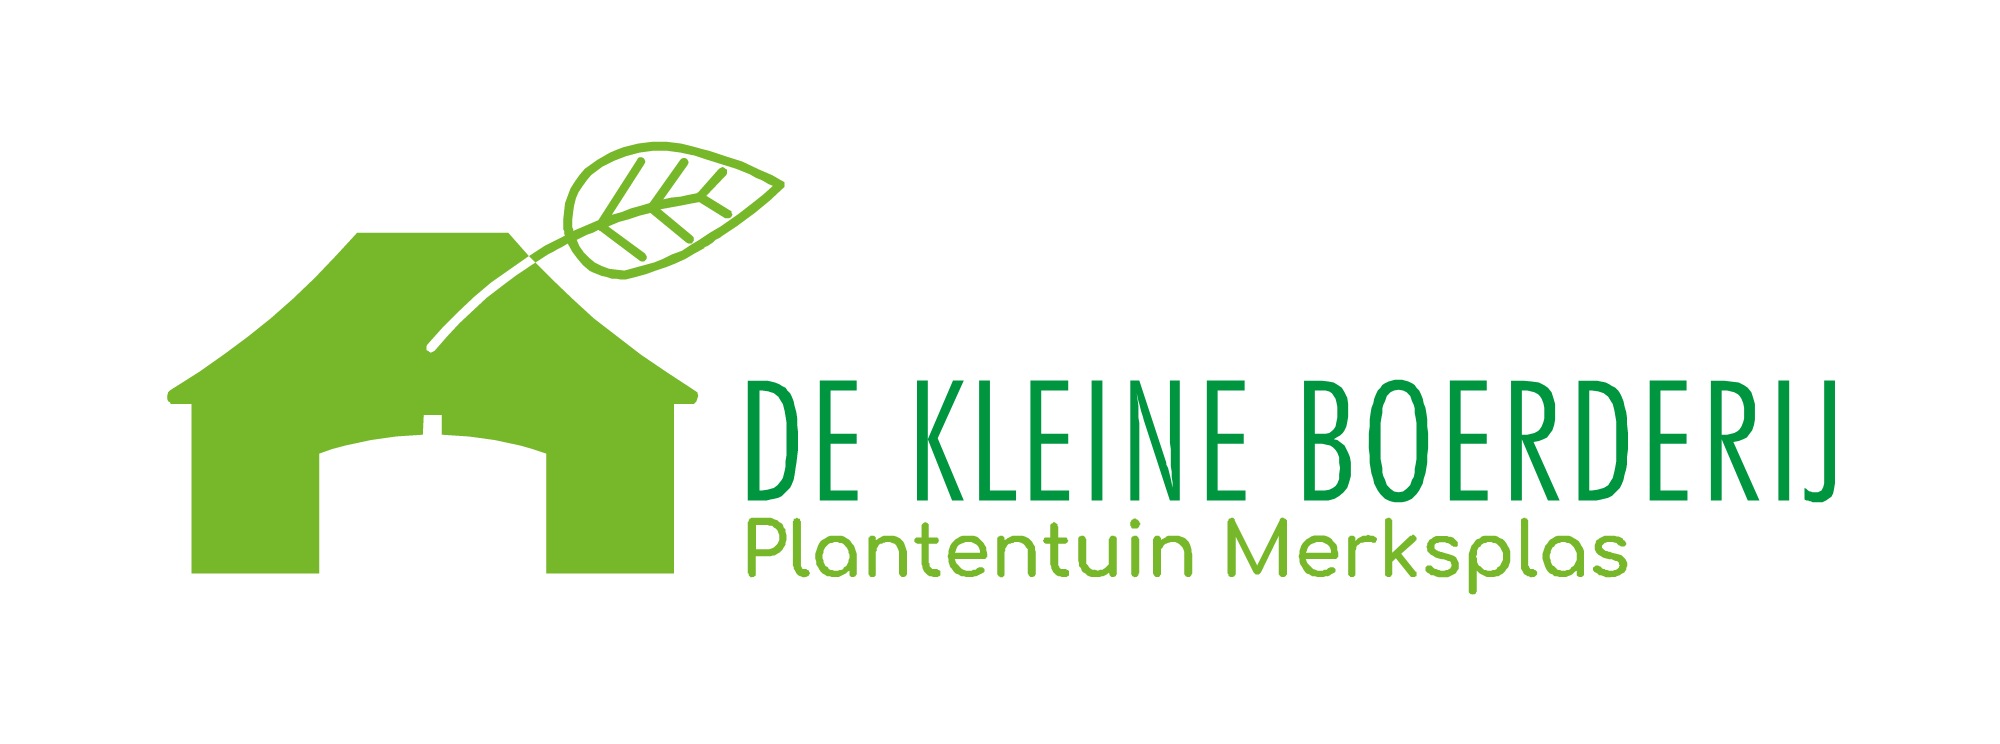 Plantentuin 'De Kleine Boerderij' Merksplas 